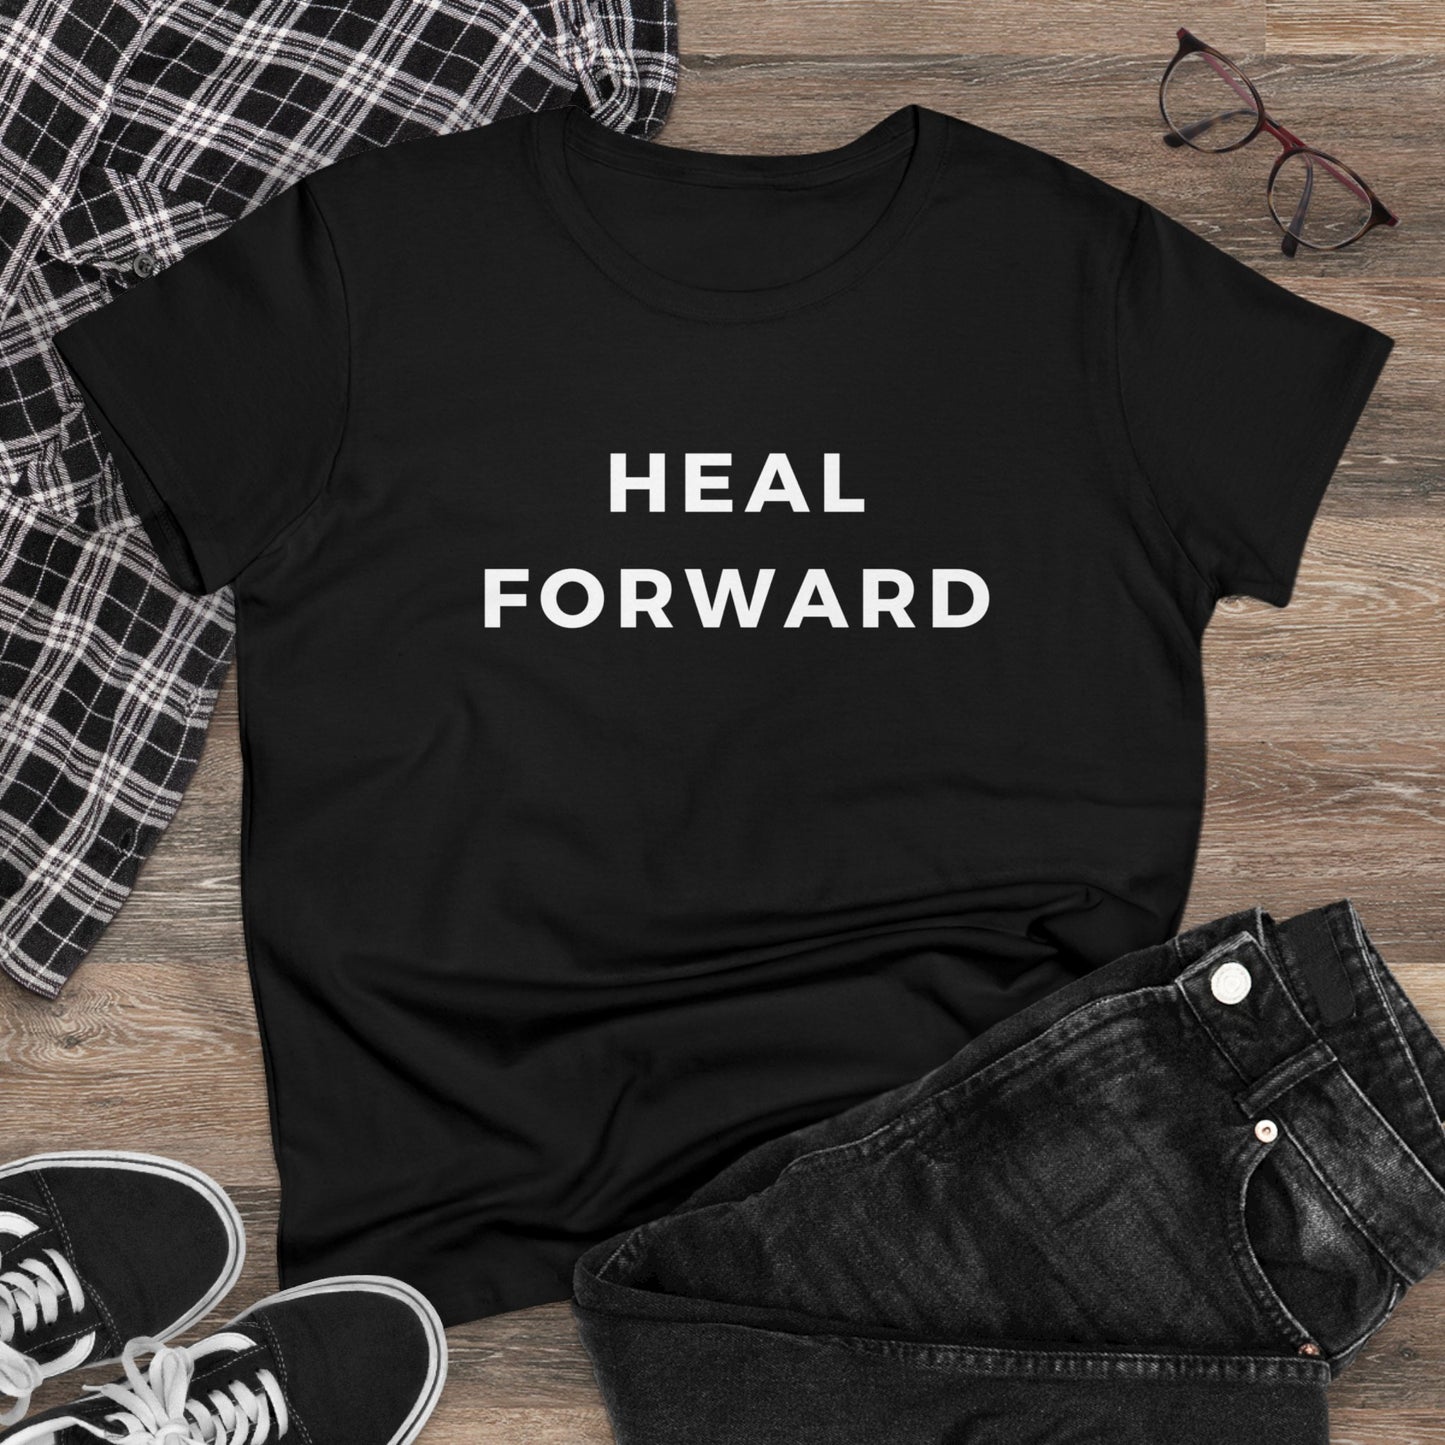 Heal forward Tee Women's Heavy Cotton Tee